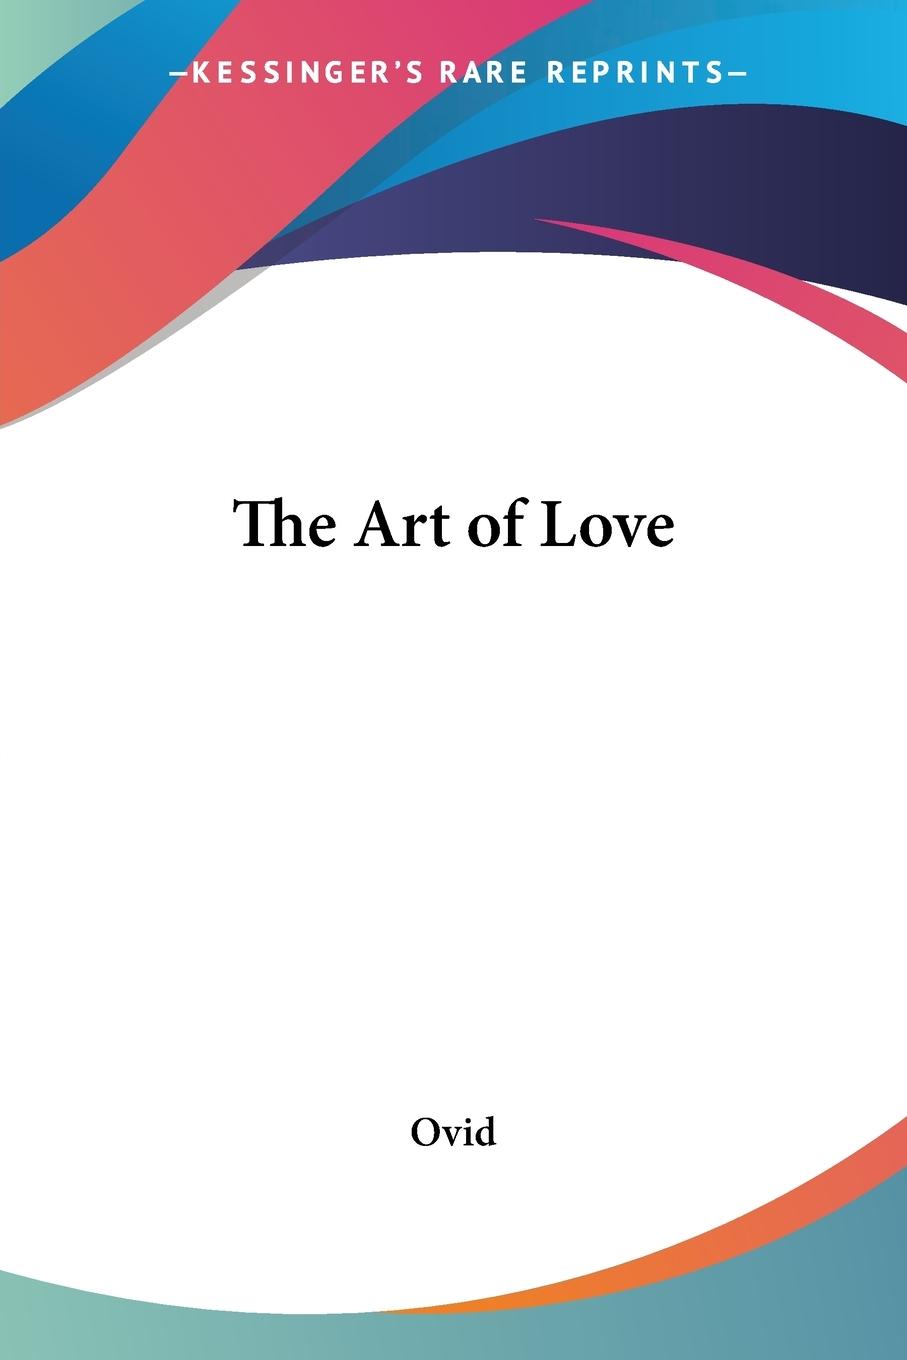 The Art of Love - Ovid